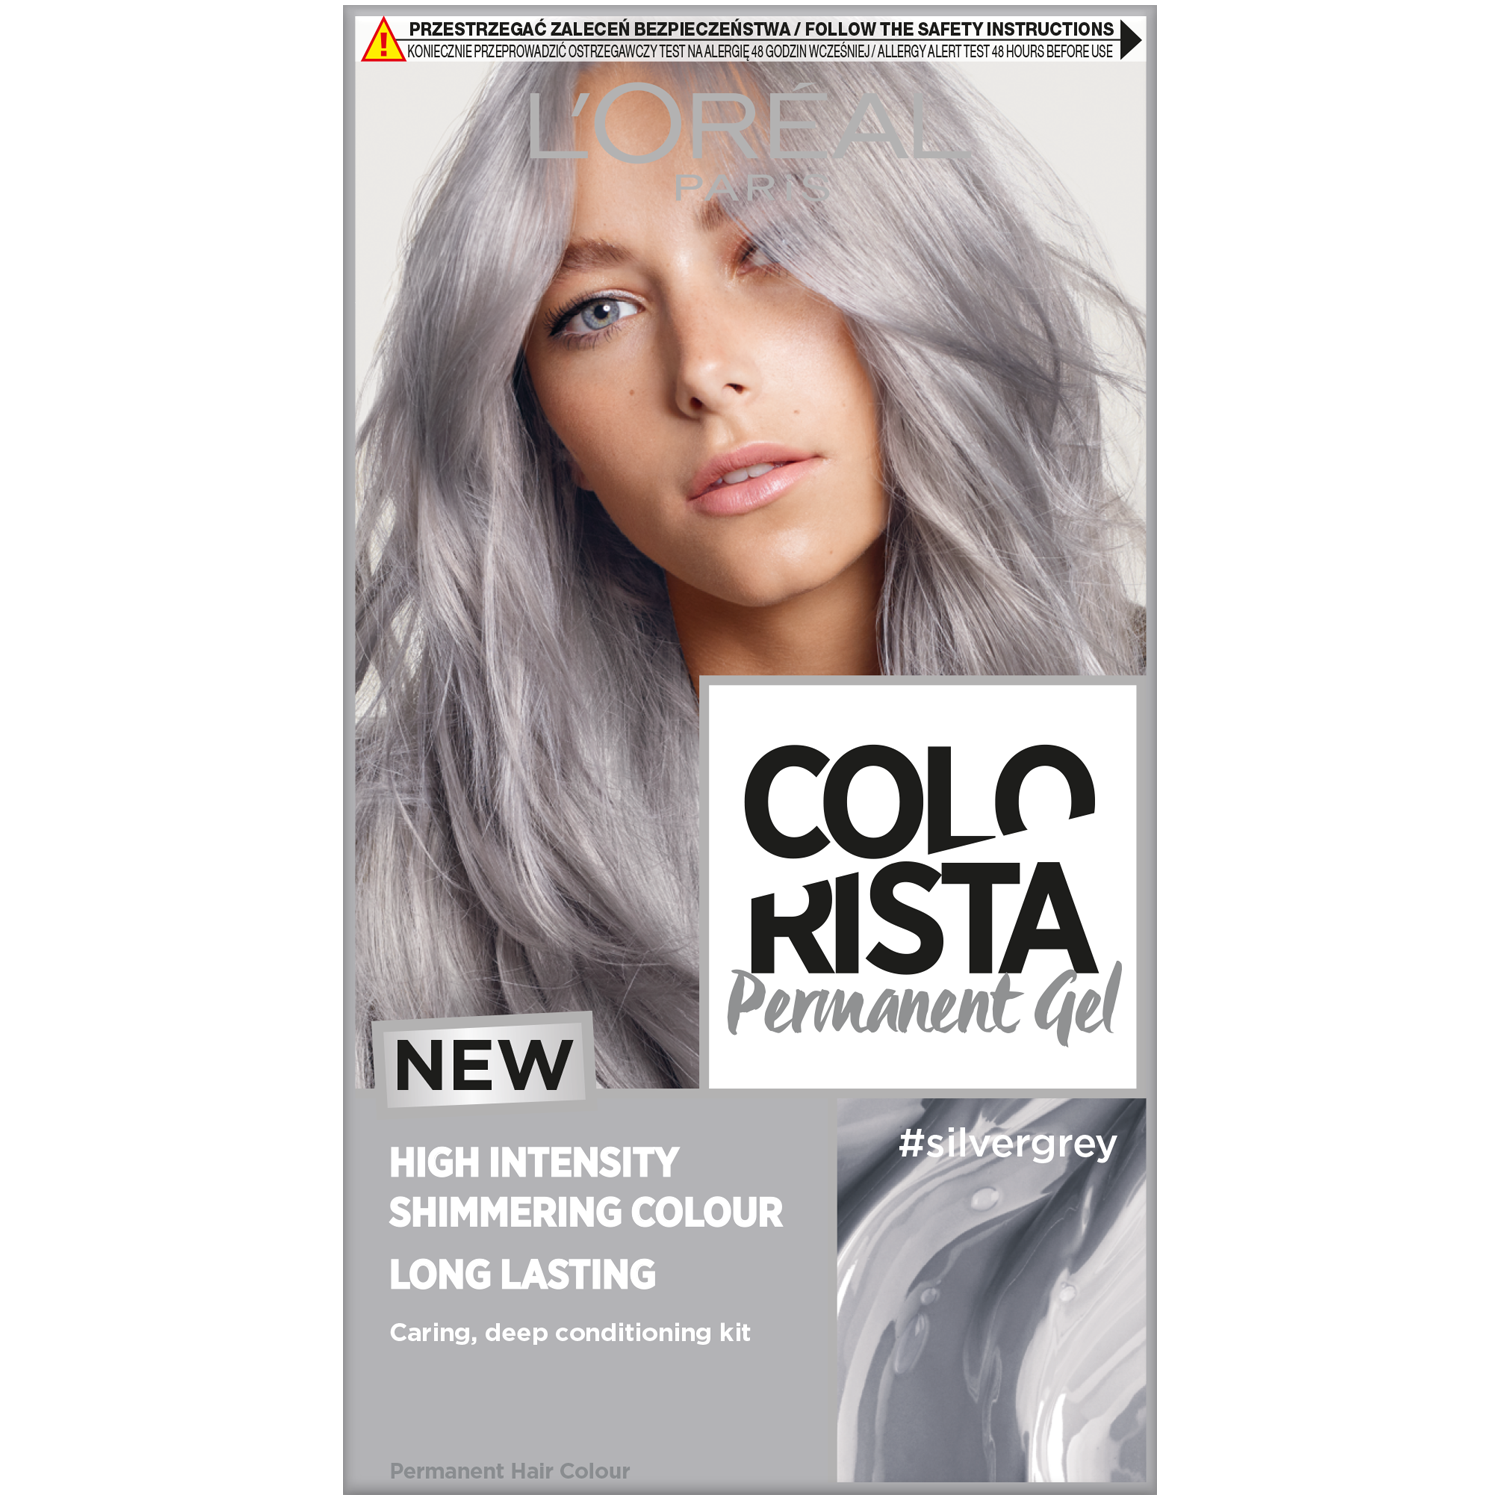 L'Oréal Paris Colorista Permanent farba do włosów #silvergrey | hebe.pl